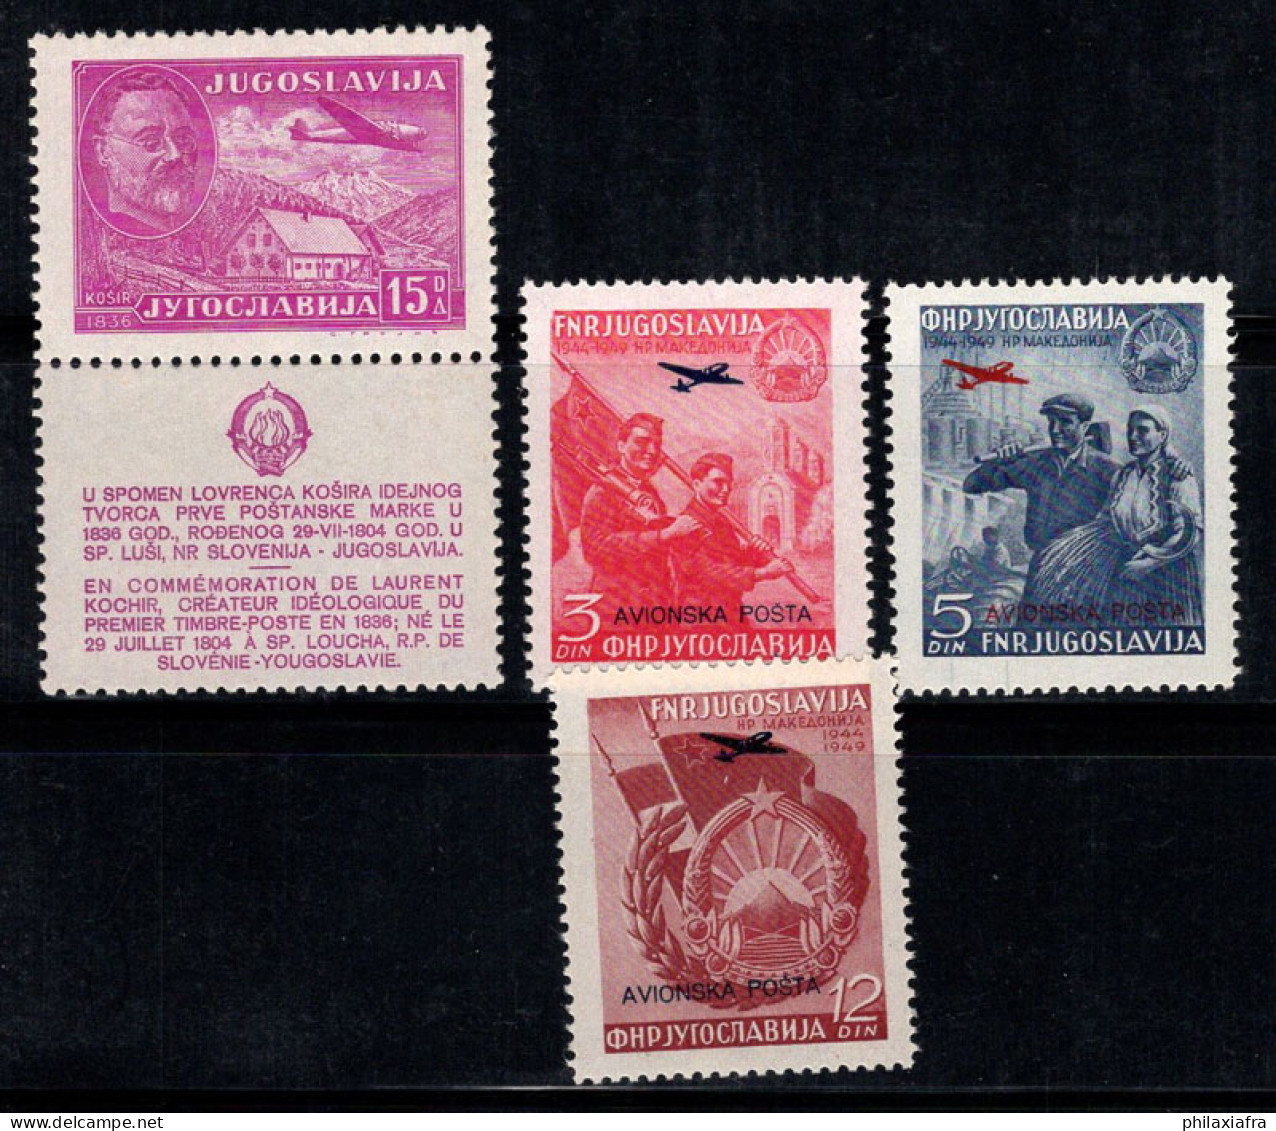 Yougoslavie 1948 Mi. 556, 575-577 Neuf ** 100% Poste Aérienne Kosir, AVIONSKA - Airmail